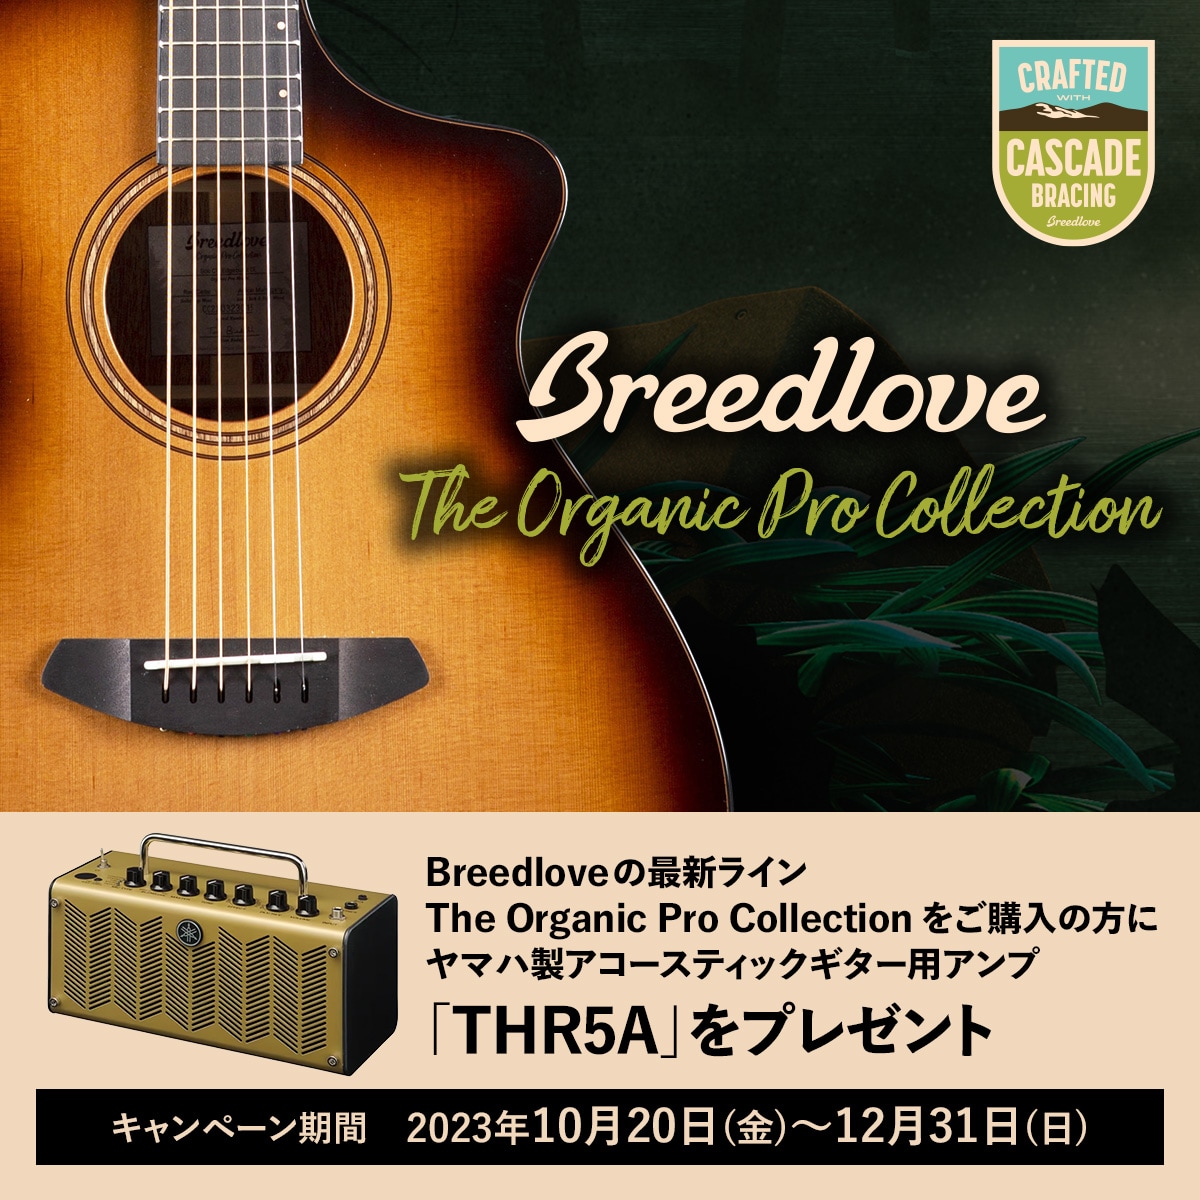 The Organic Pro Collection プレゼントキャンペーン